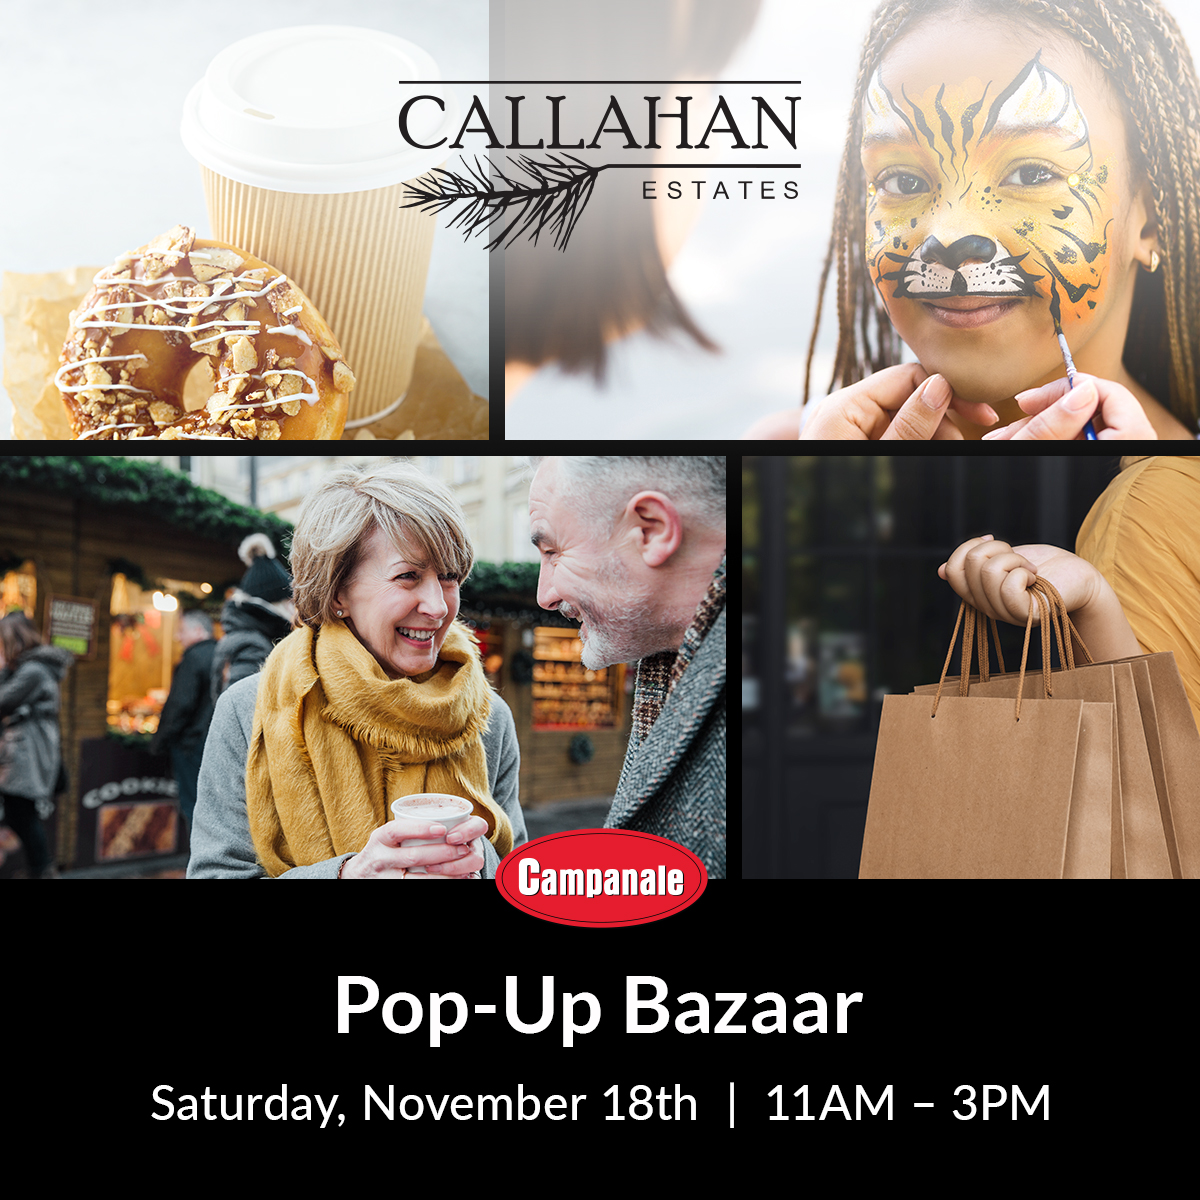 Campanale's Pop-Up Bazaar in Callahan Estates